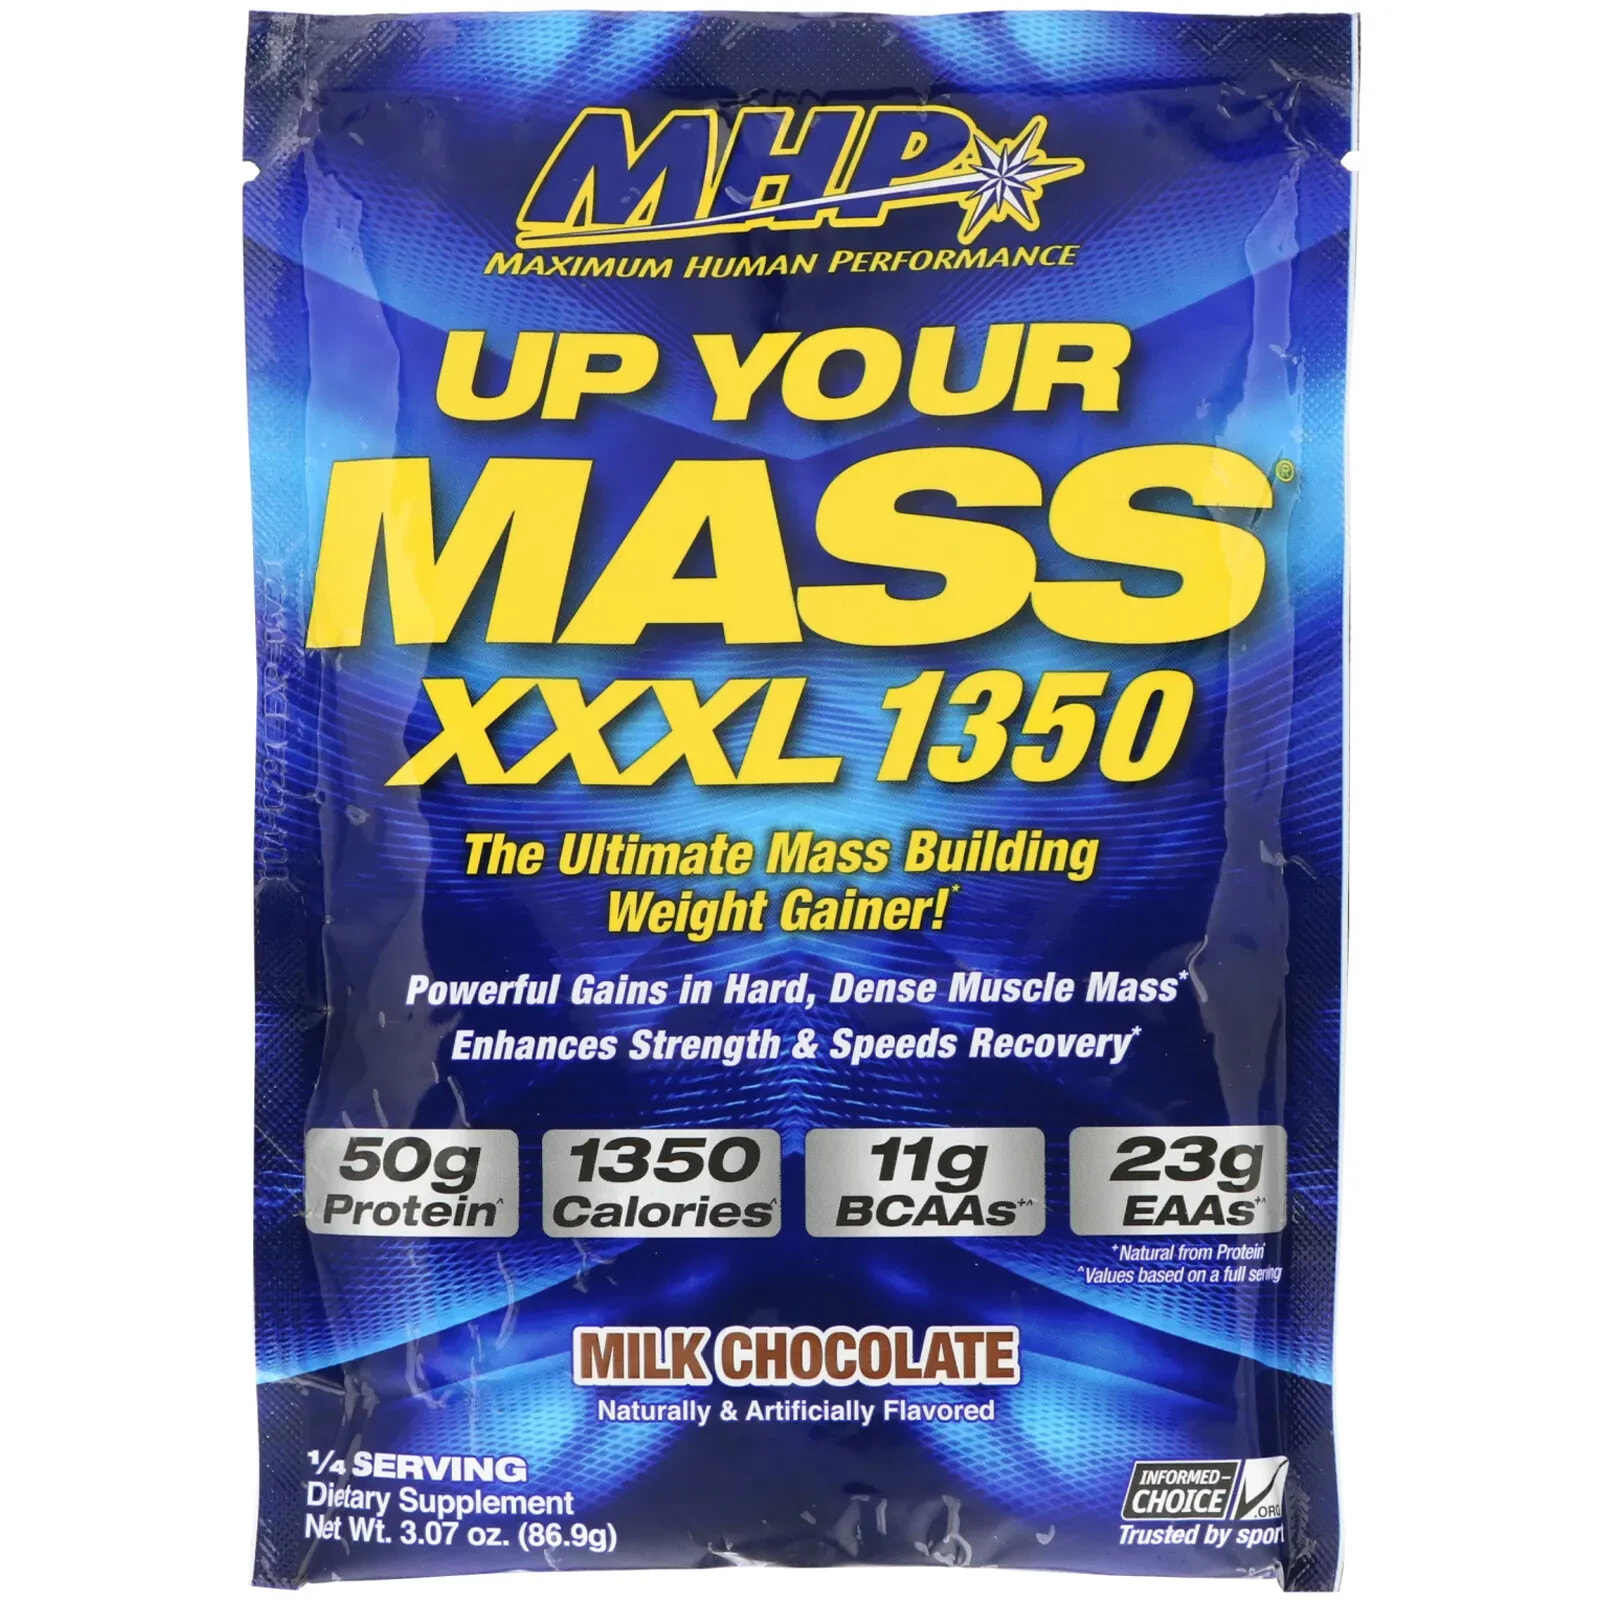 Up Your Mass XXXL 1350, Milk Chocolate, 6.12 lbs (2,780 g)